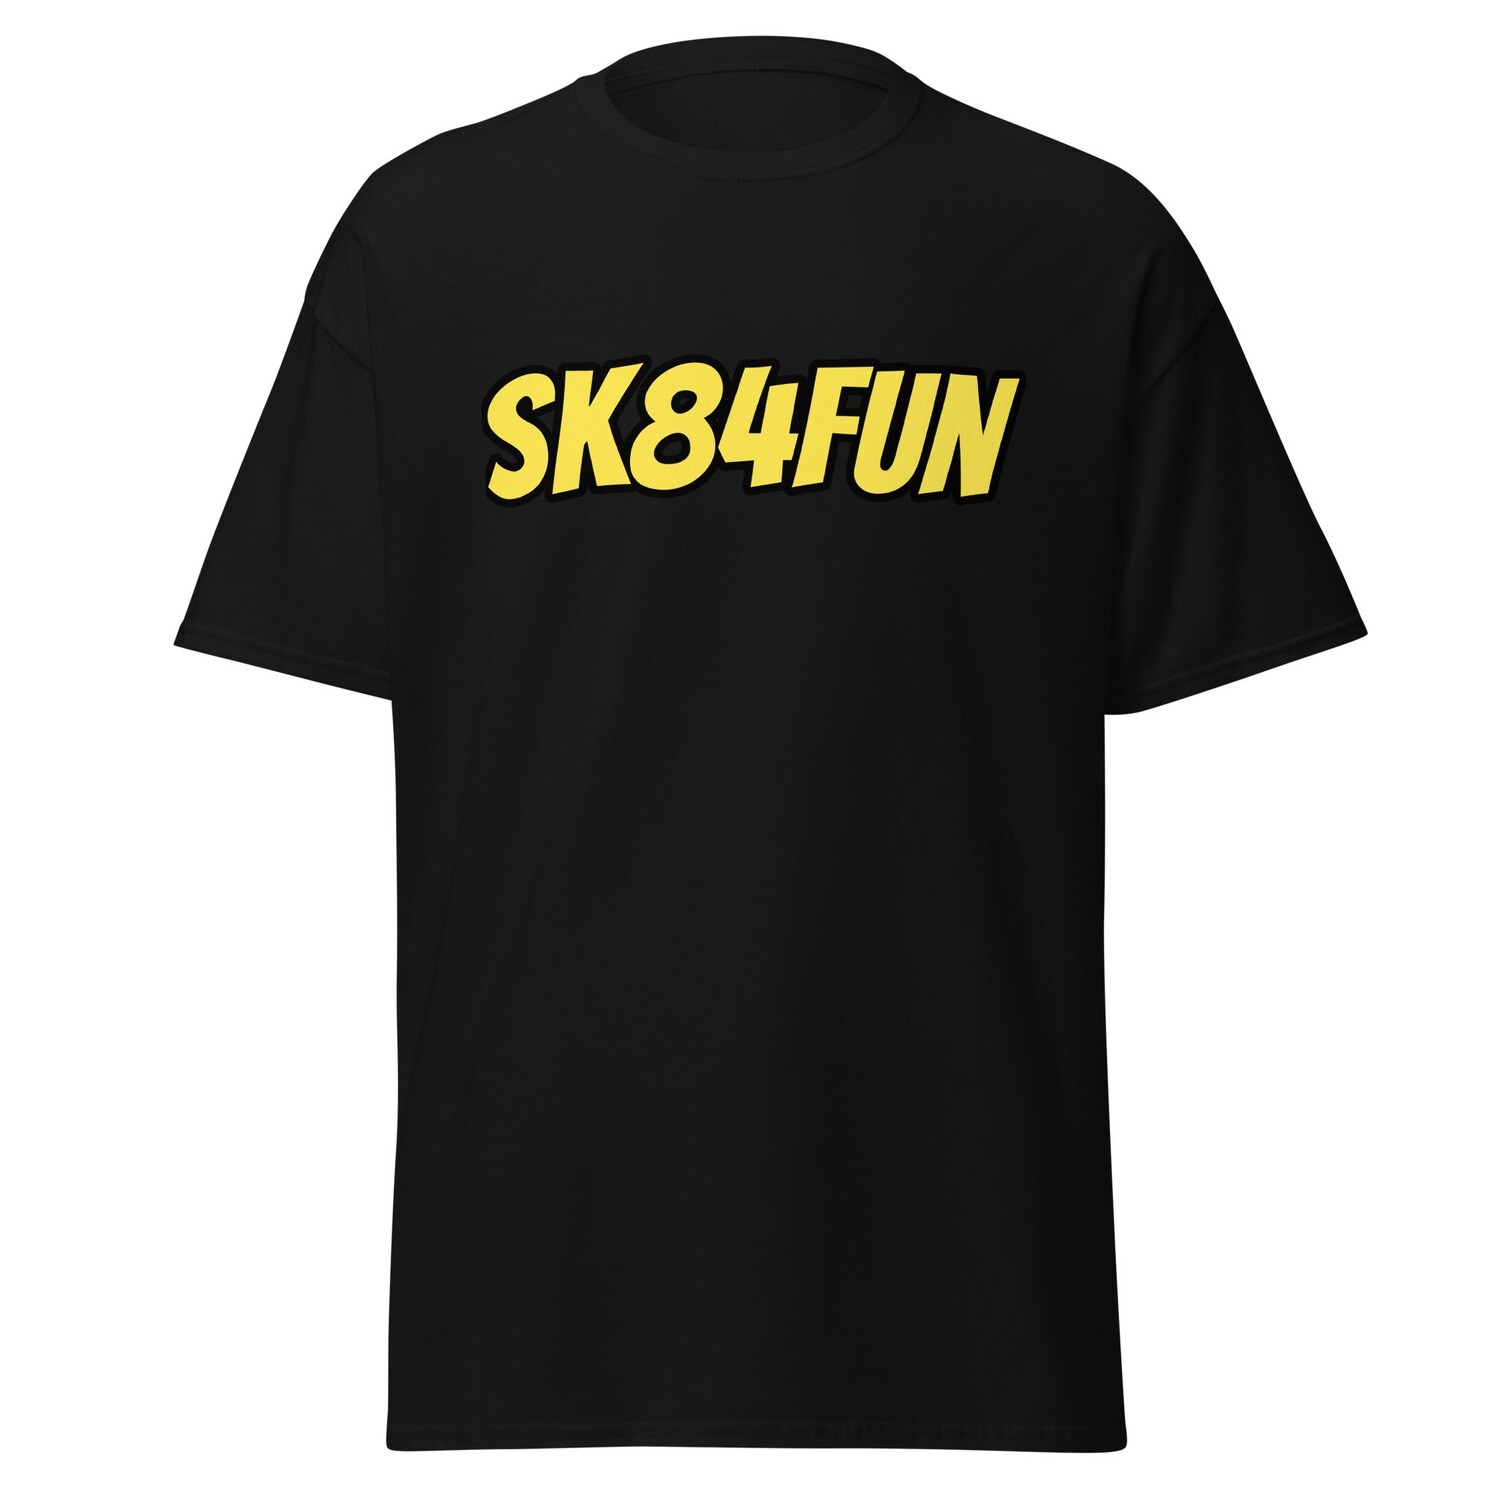 SK84FUN - Men's classic tee